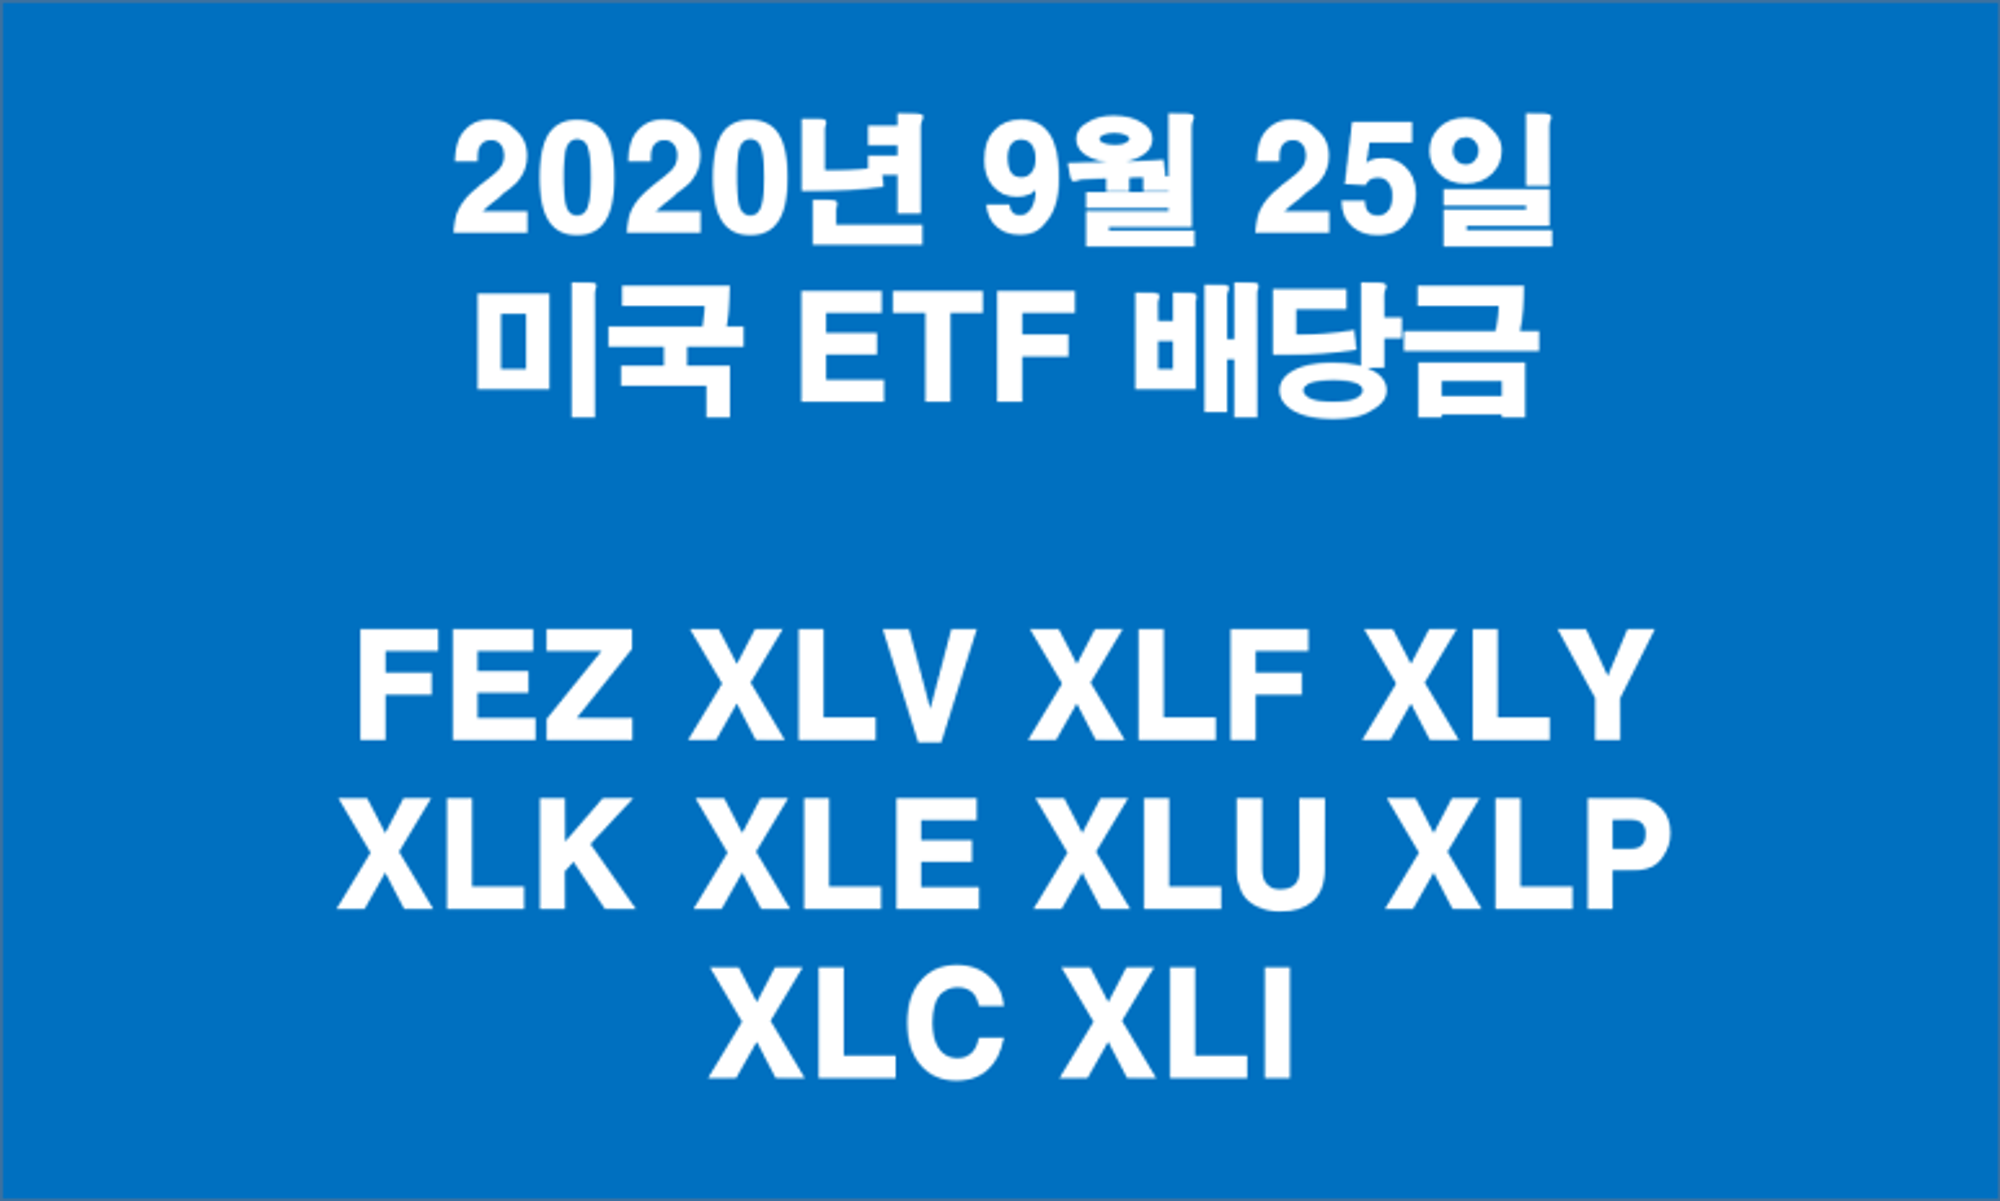 FEZ XLV XLF XLY XLK XLE XLU XLP XLC XLI 미국 ETF 배당금 9월 25일